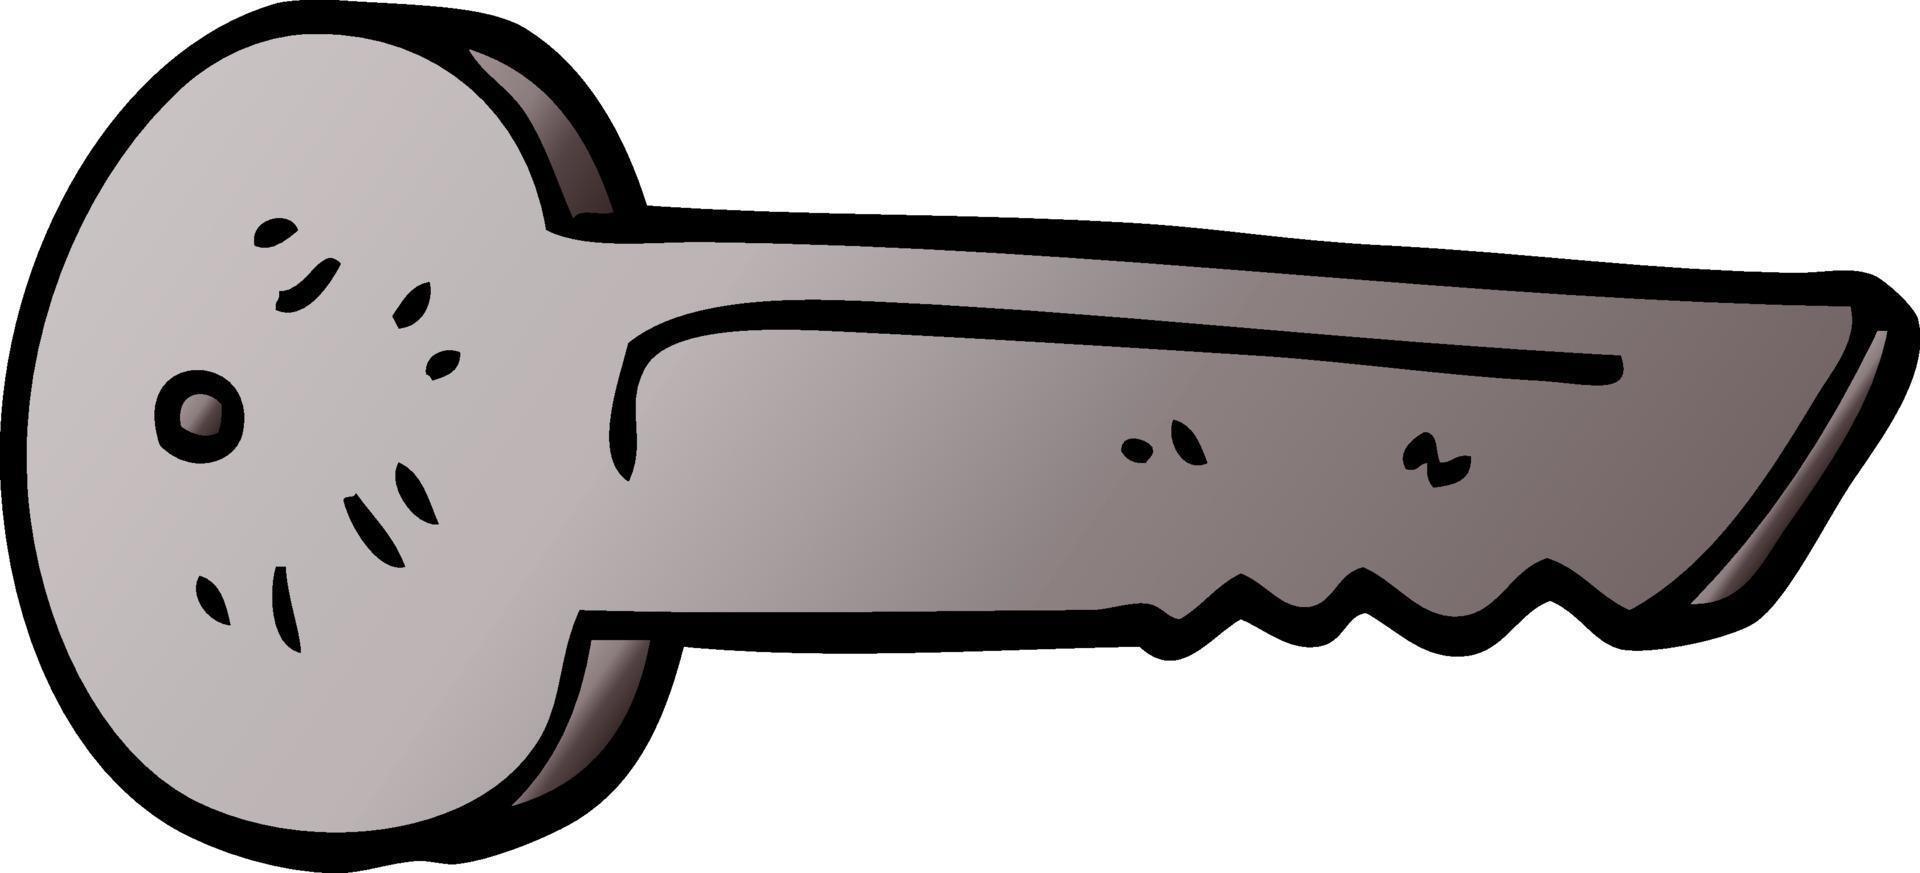 cartoon doodle metal key vector